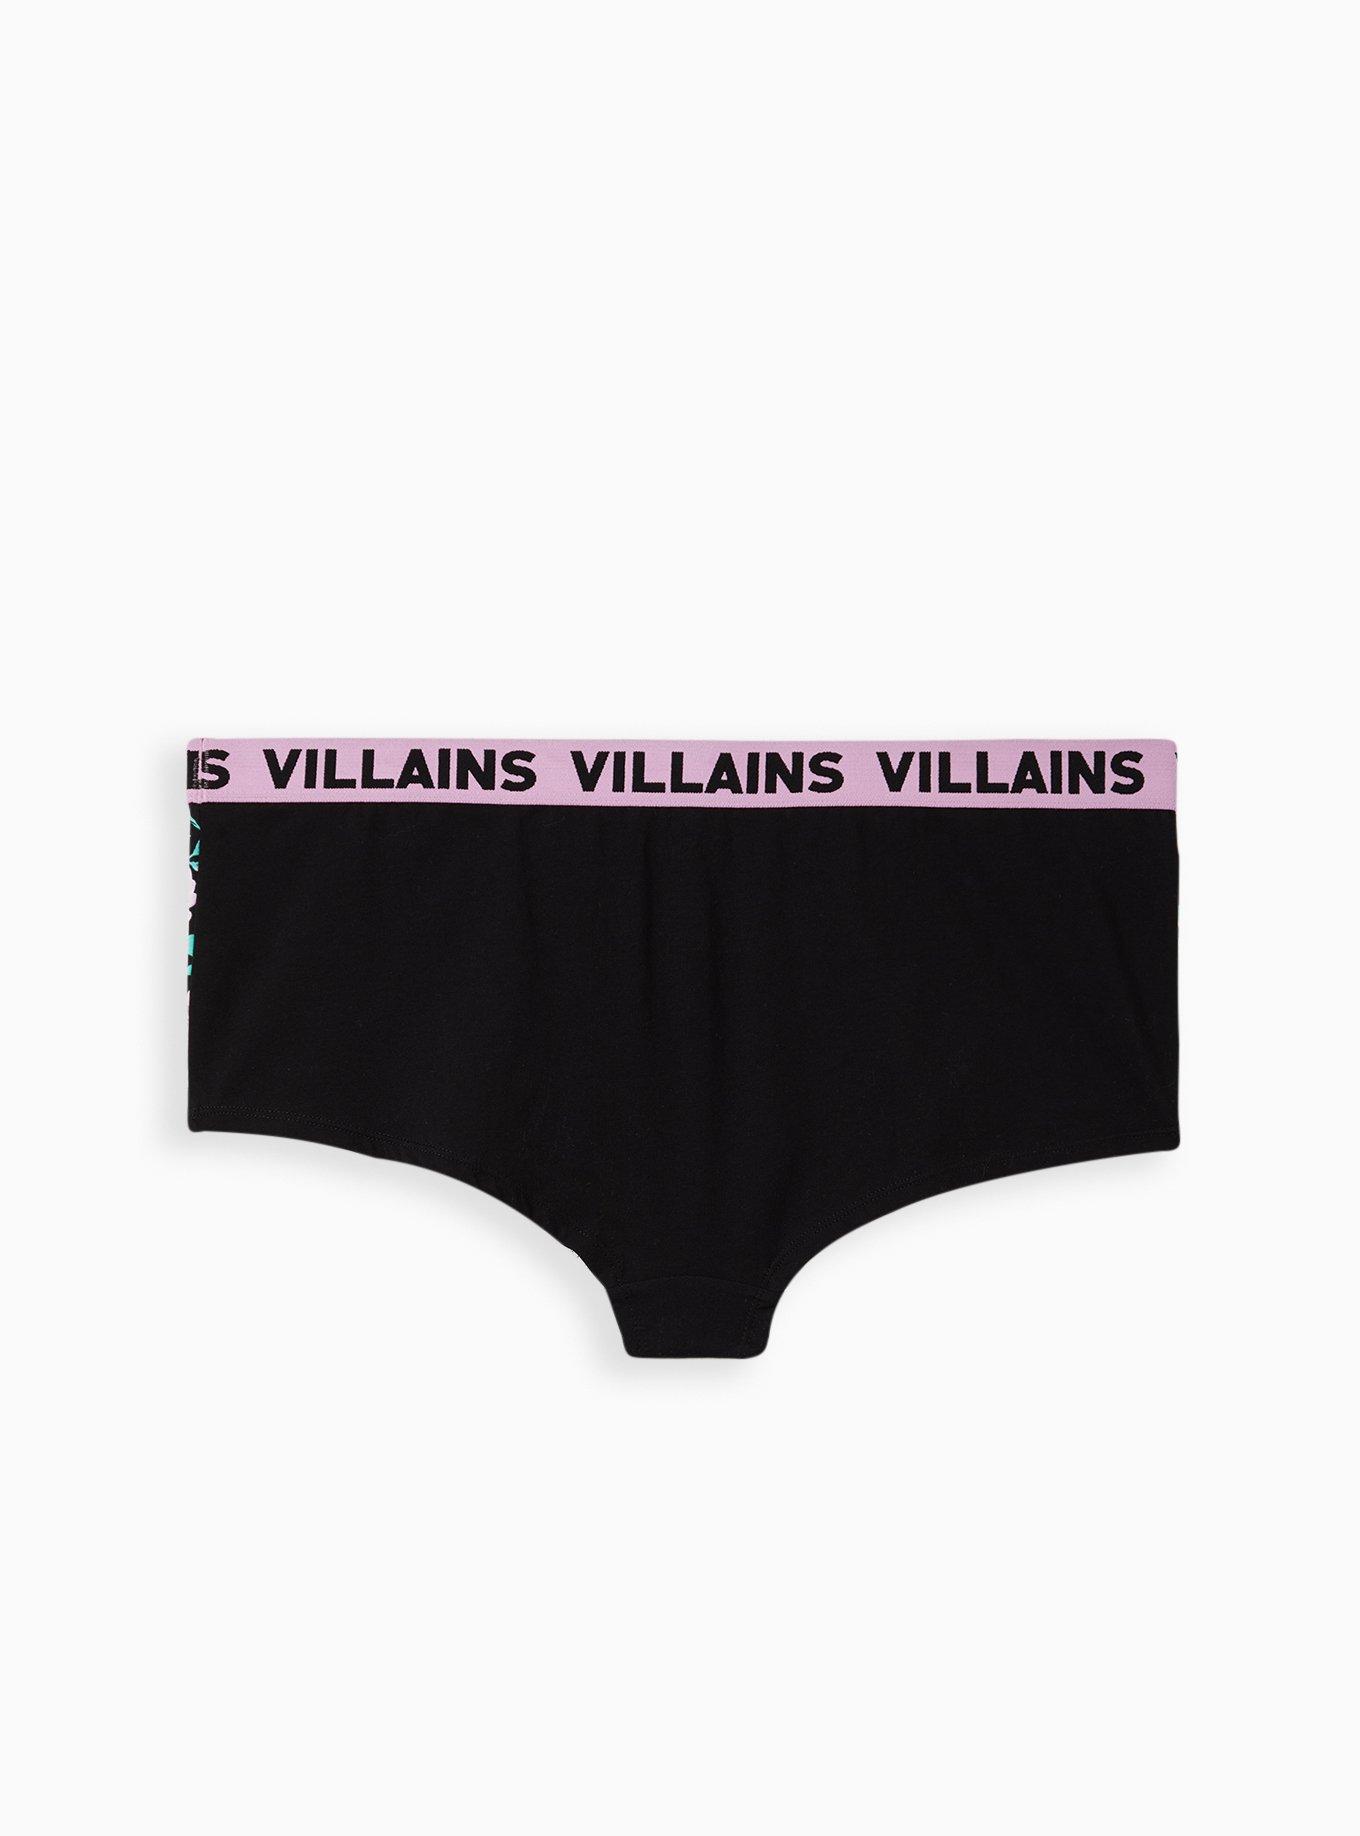 NWT TORRID Boyshort Pantie Underwear 2 Disney Villains Black Purple